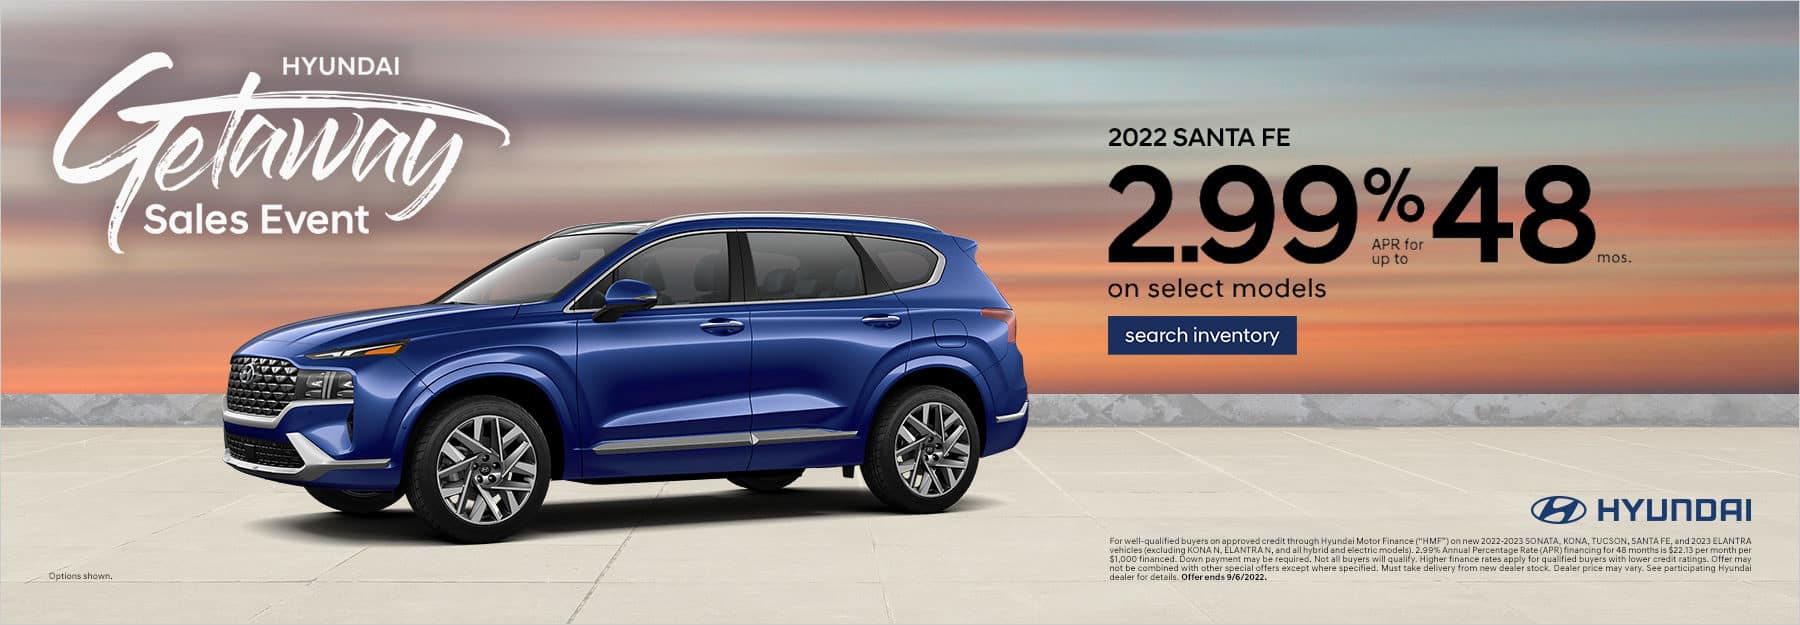 2022 Hyundai Sonata for 2.99% APR